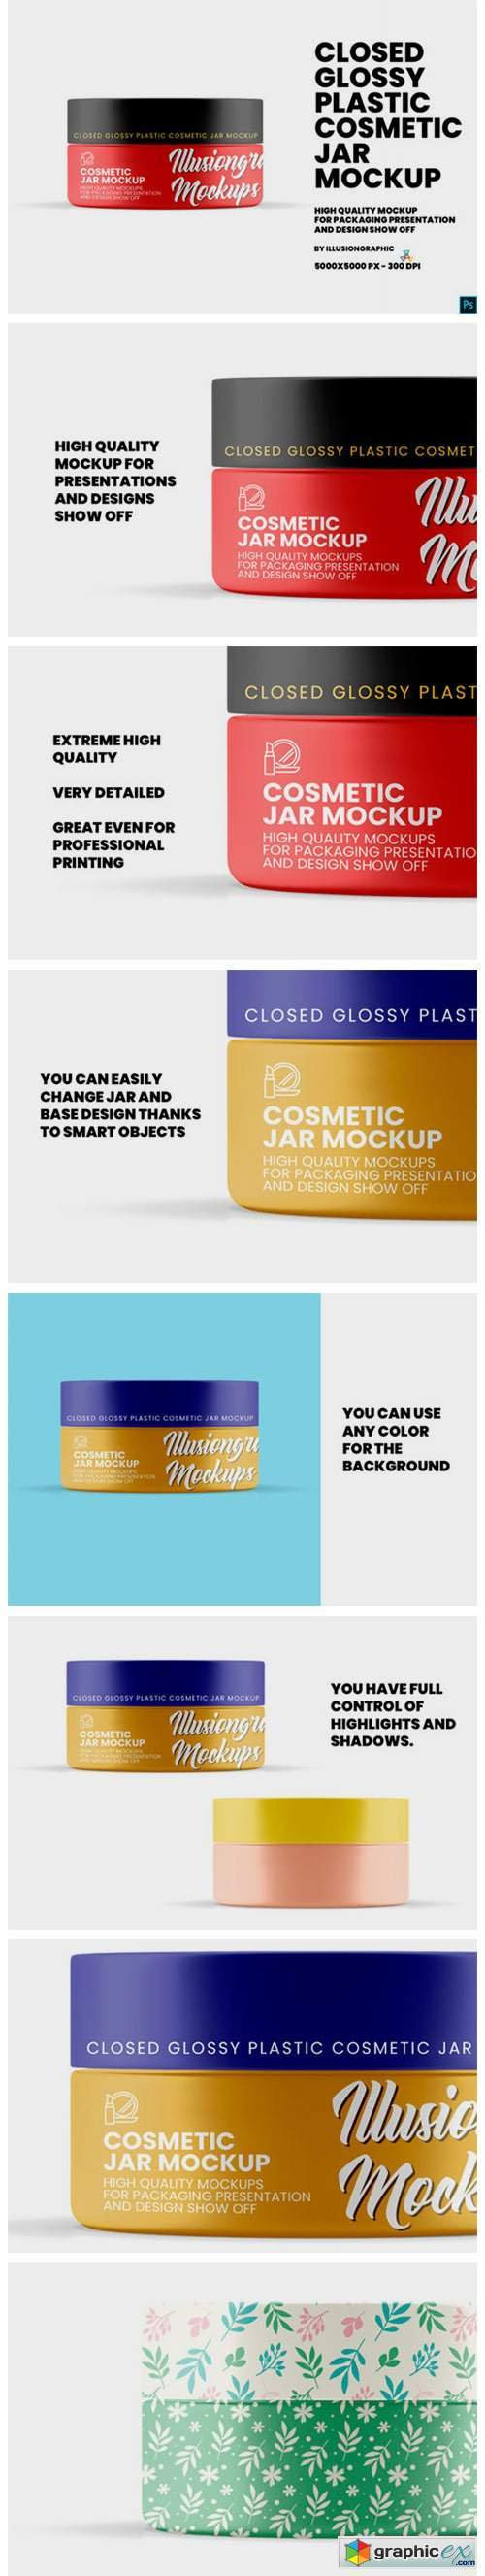 Glossy Plastic Cosmetic Jar Mockup Â» Free Download Vector Stock Image